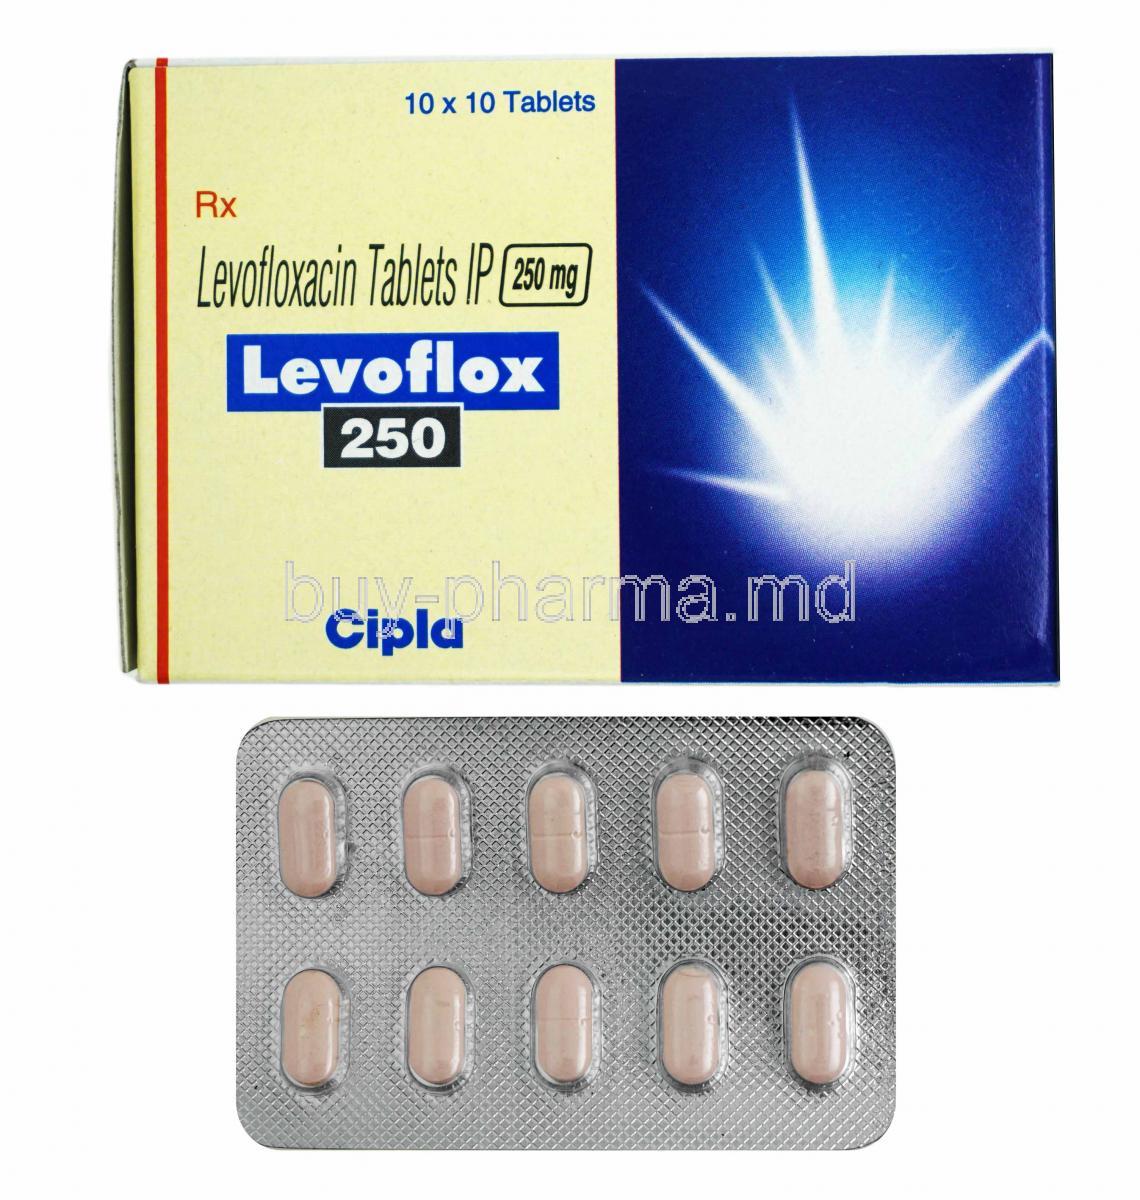 Levoflox,  Levofloxacin 250mg box and tablets